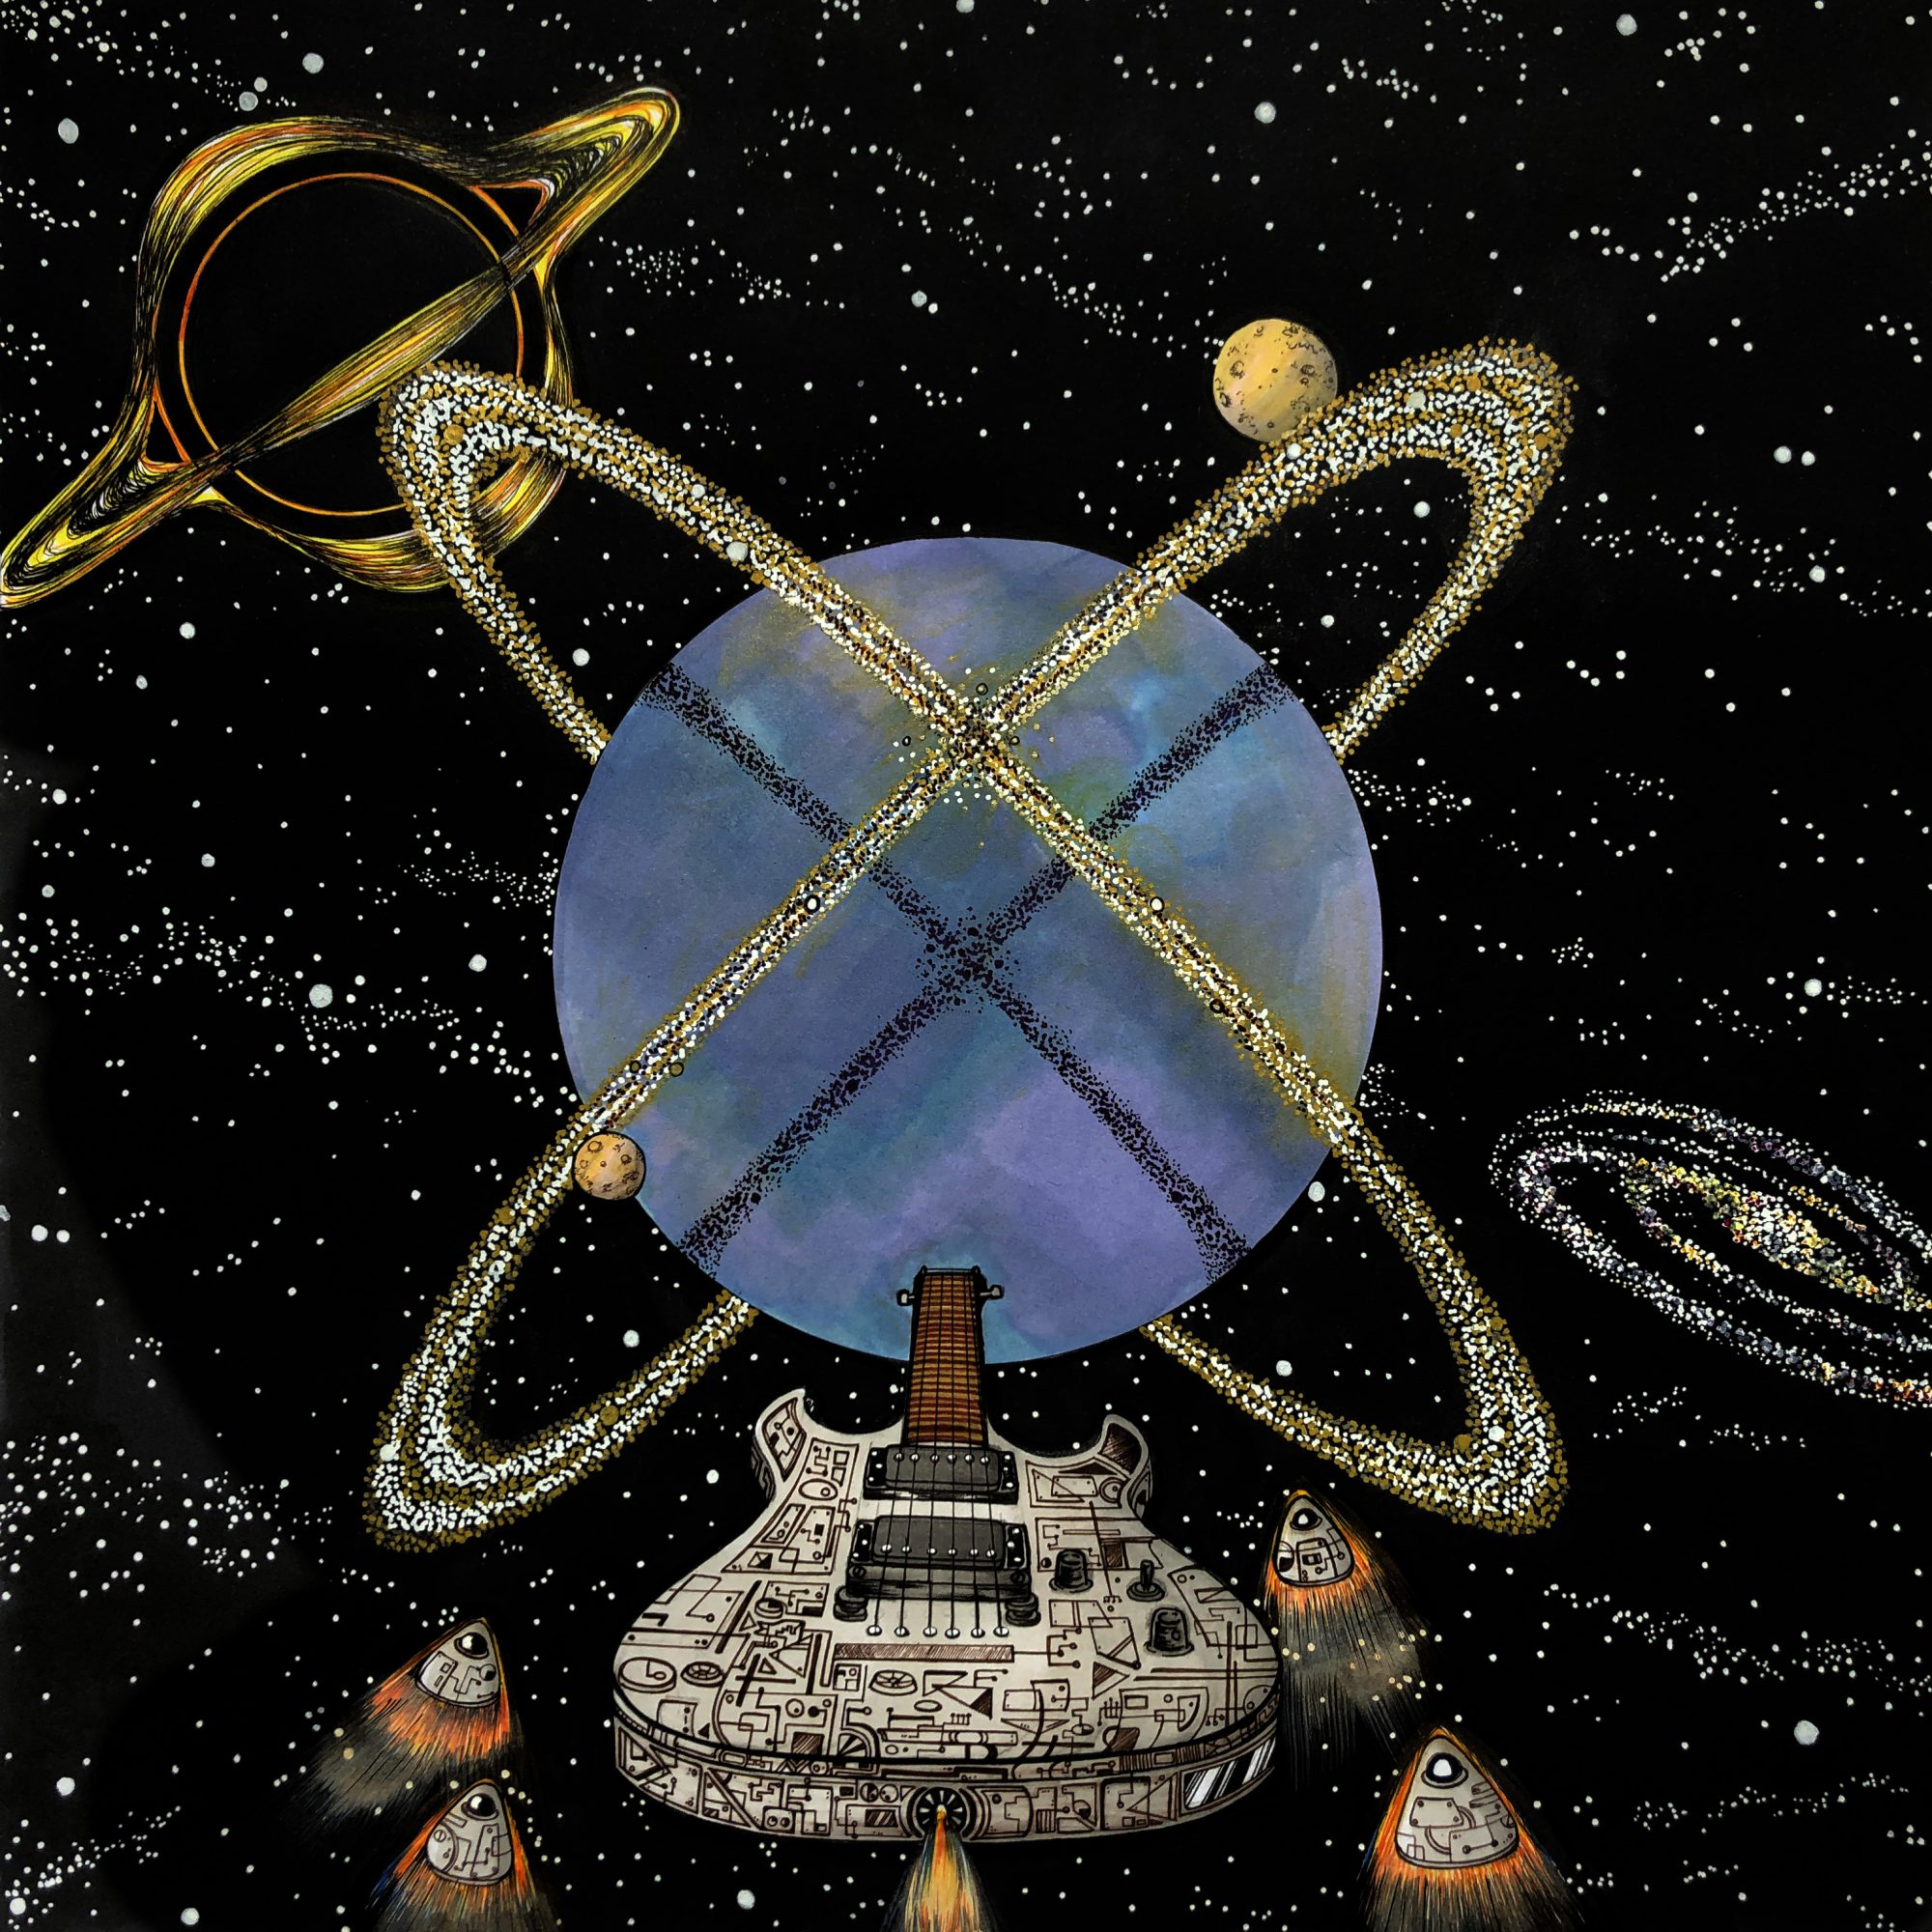 Planet X album